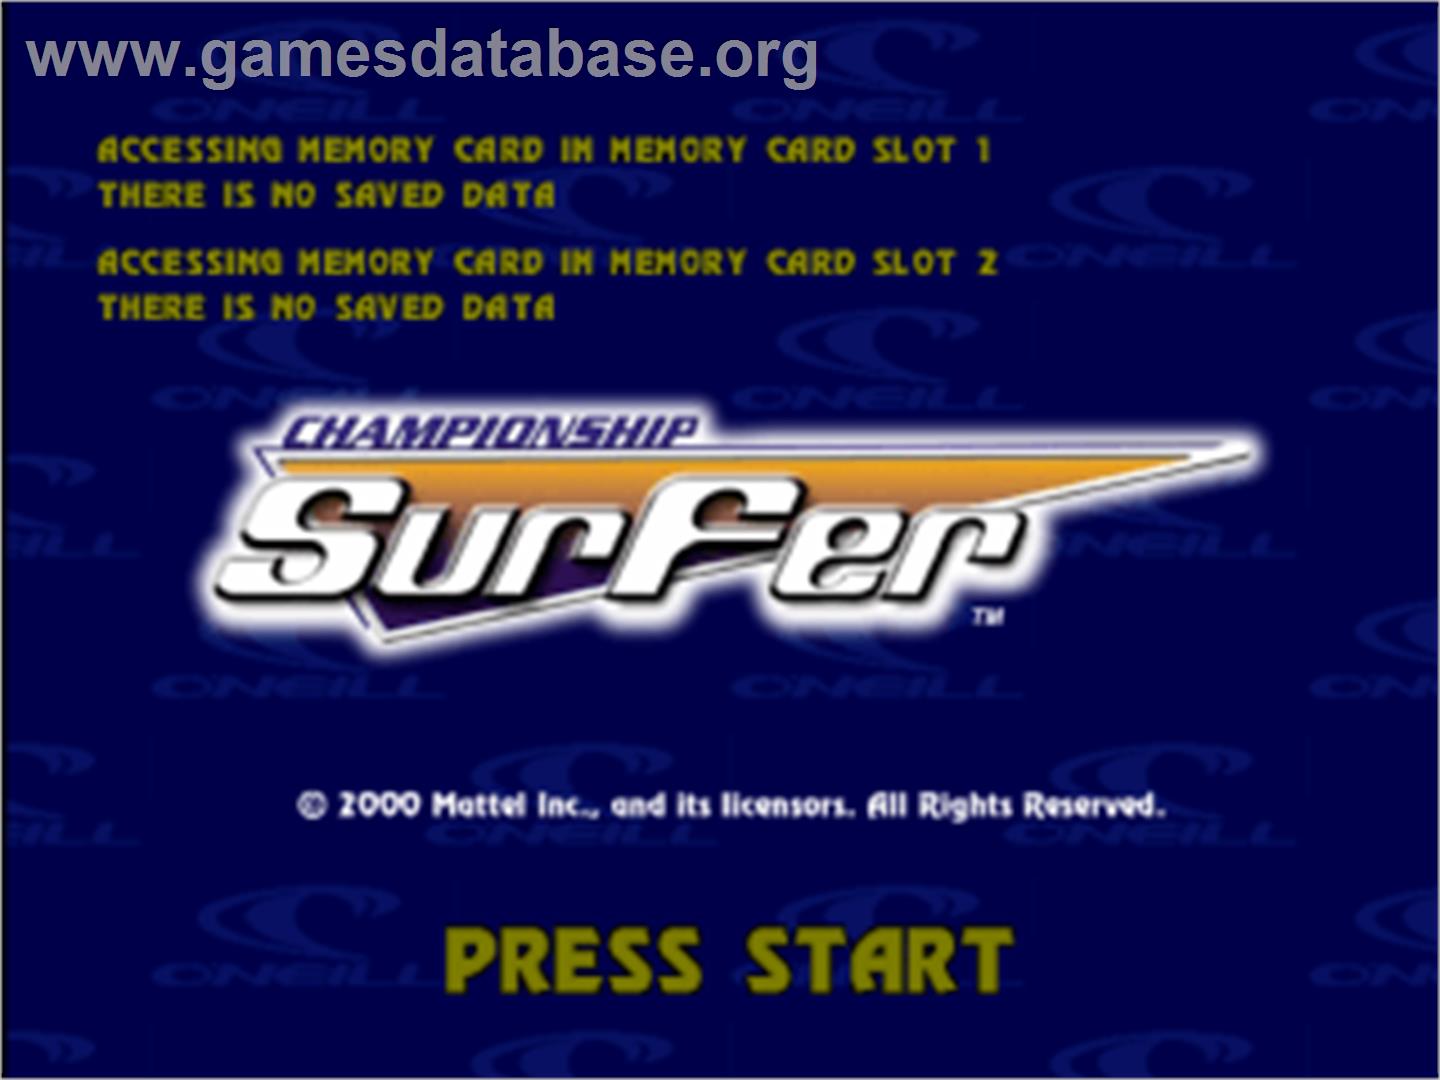 Championship Surfer - Sony Playstation - Artwork - Title Screen